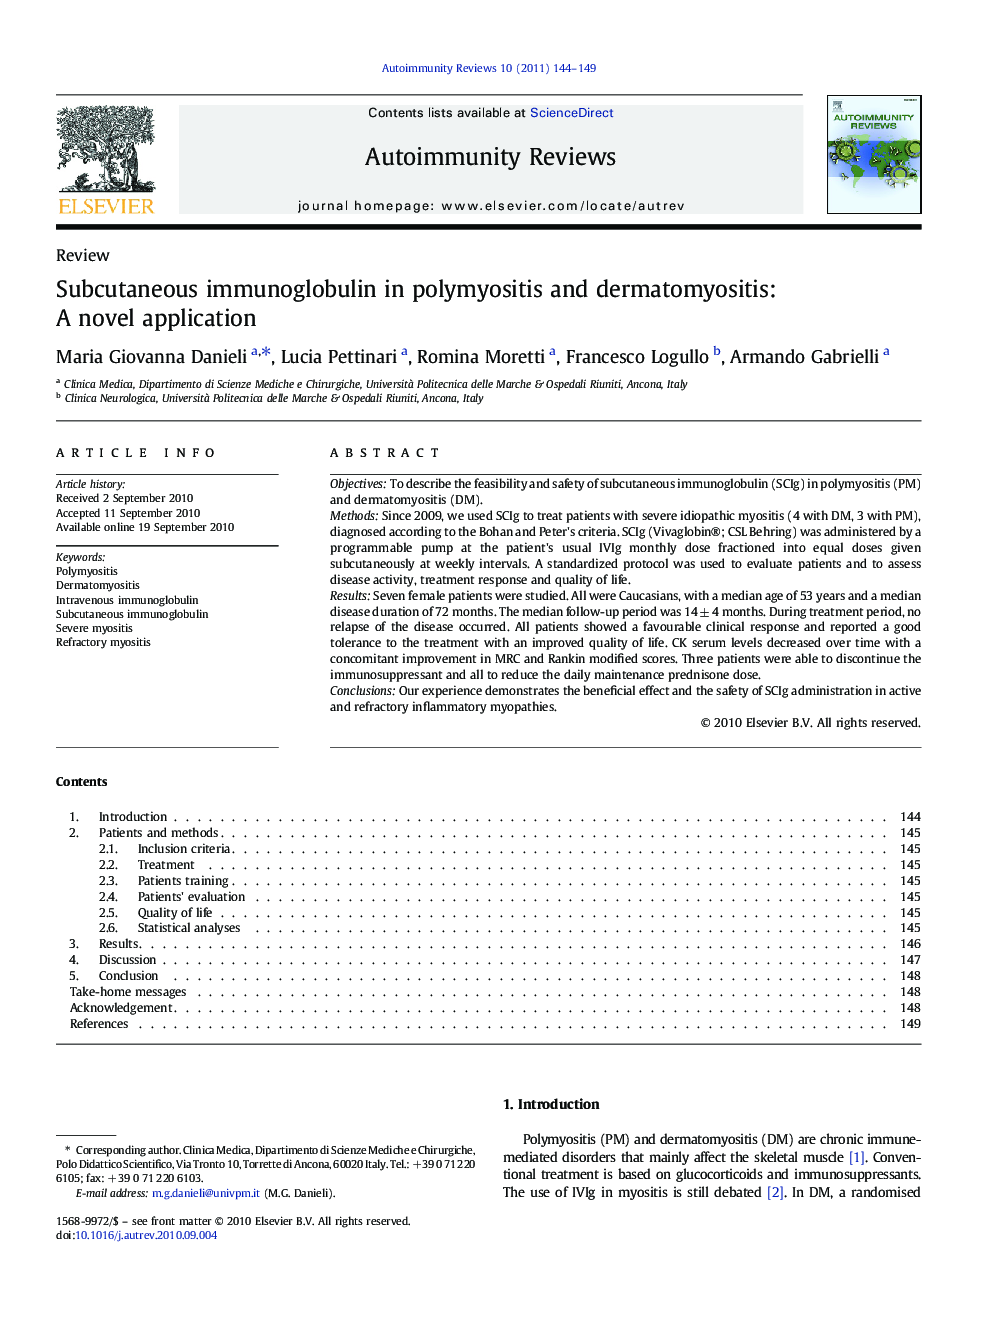 Subcutaneous immunoglobulin in polymyositis and dermatomyositis: A novel application